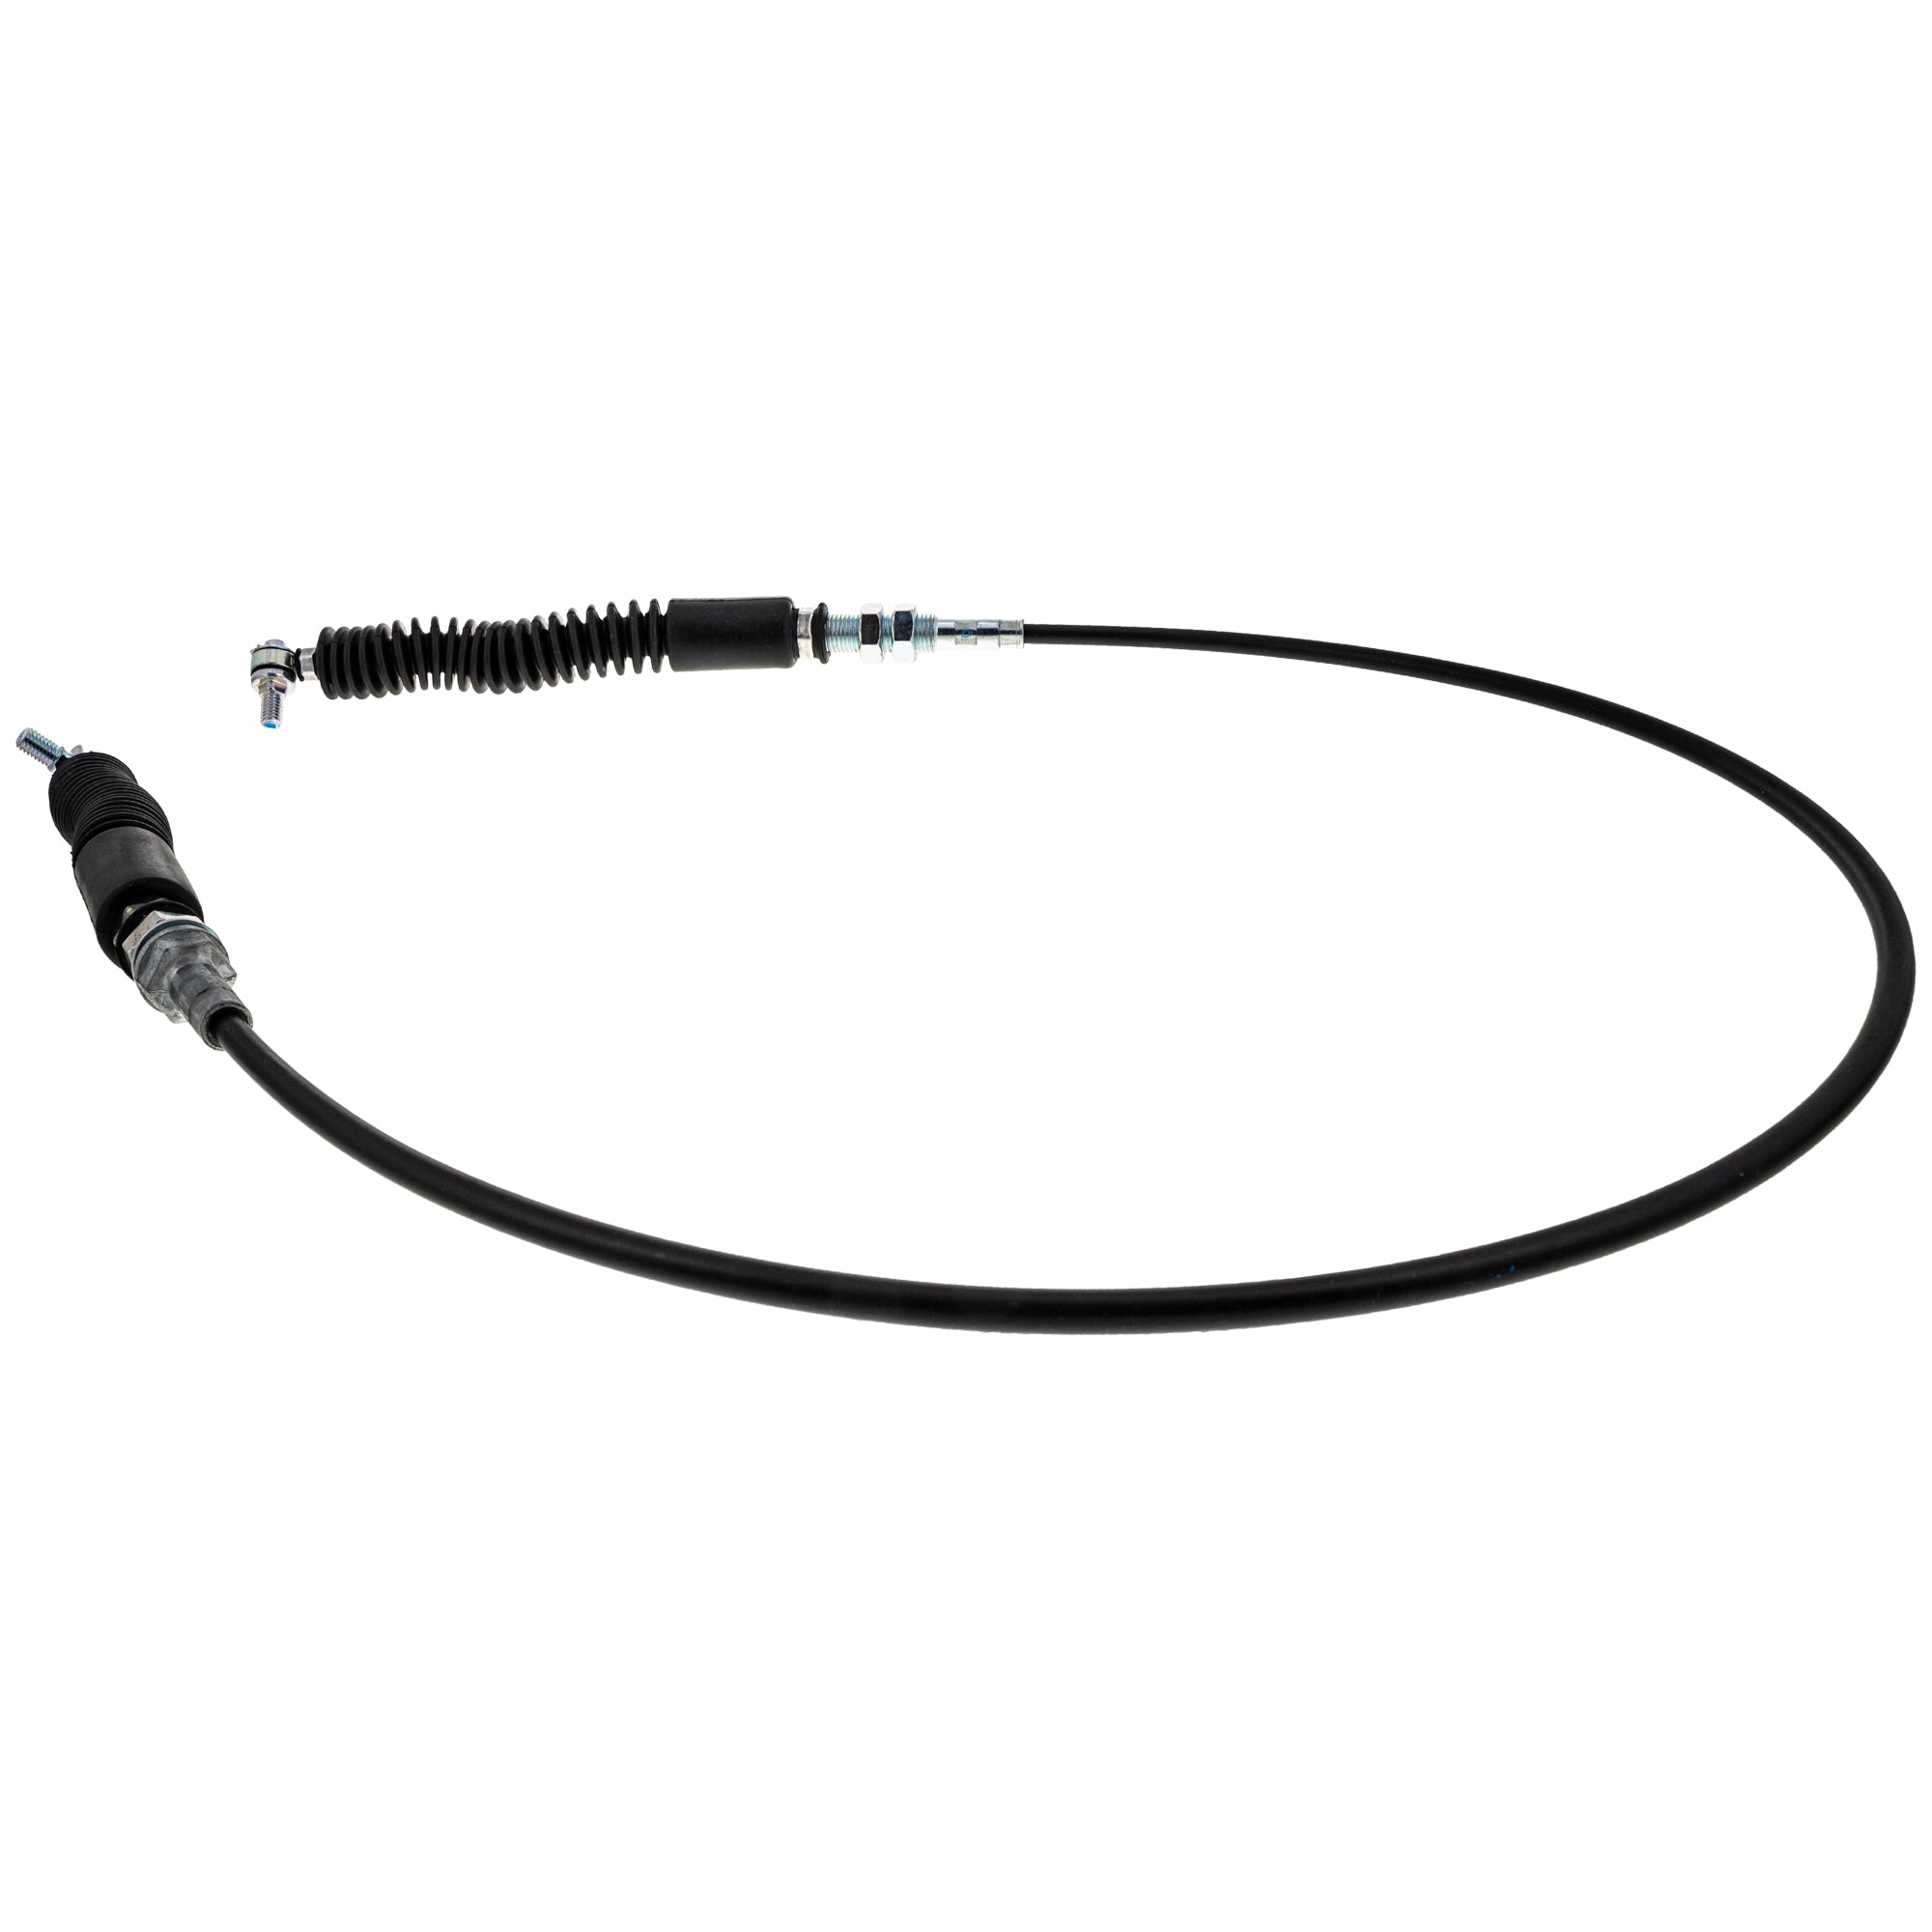 Polaris 7082535 Shift Cable Genuine OEM for 2018-2021 RZR RS1 EPS UTV 7082276